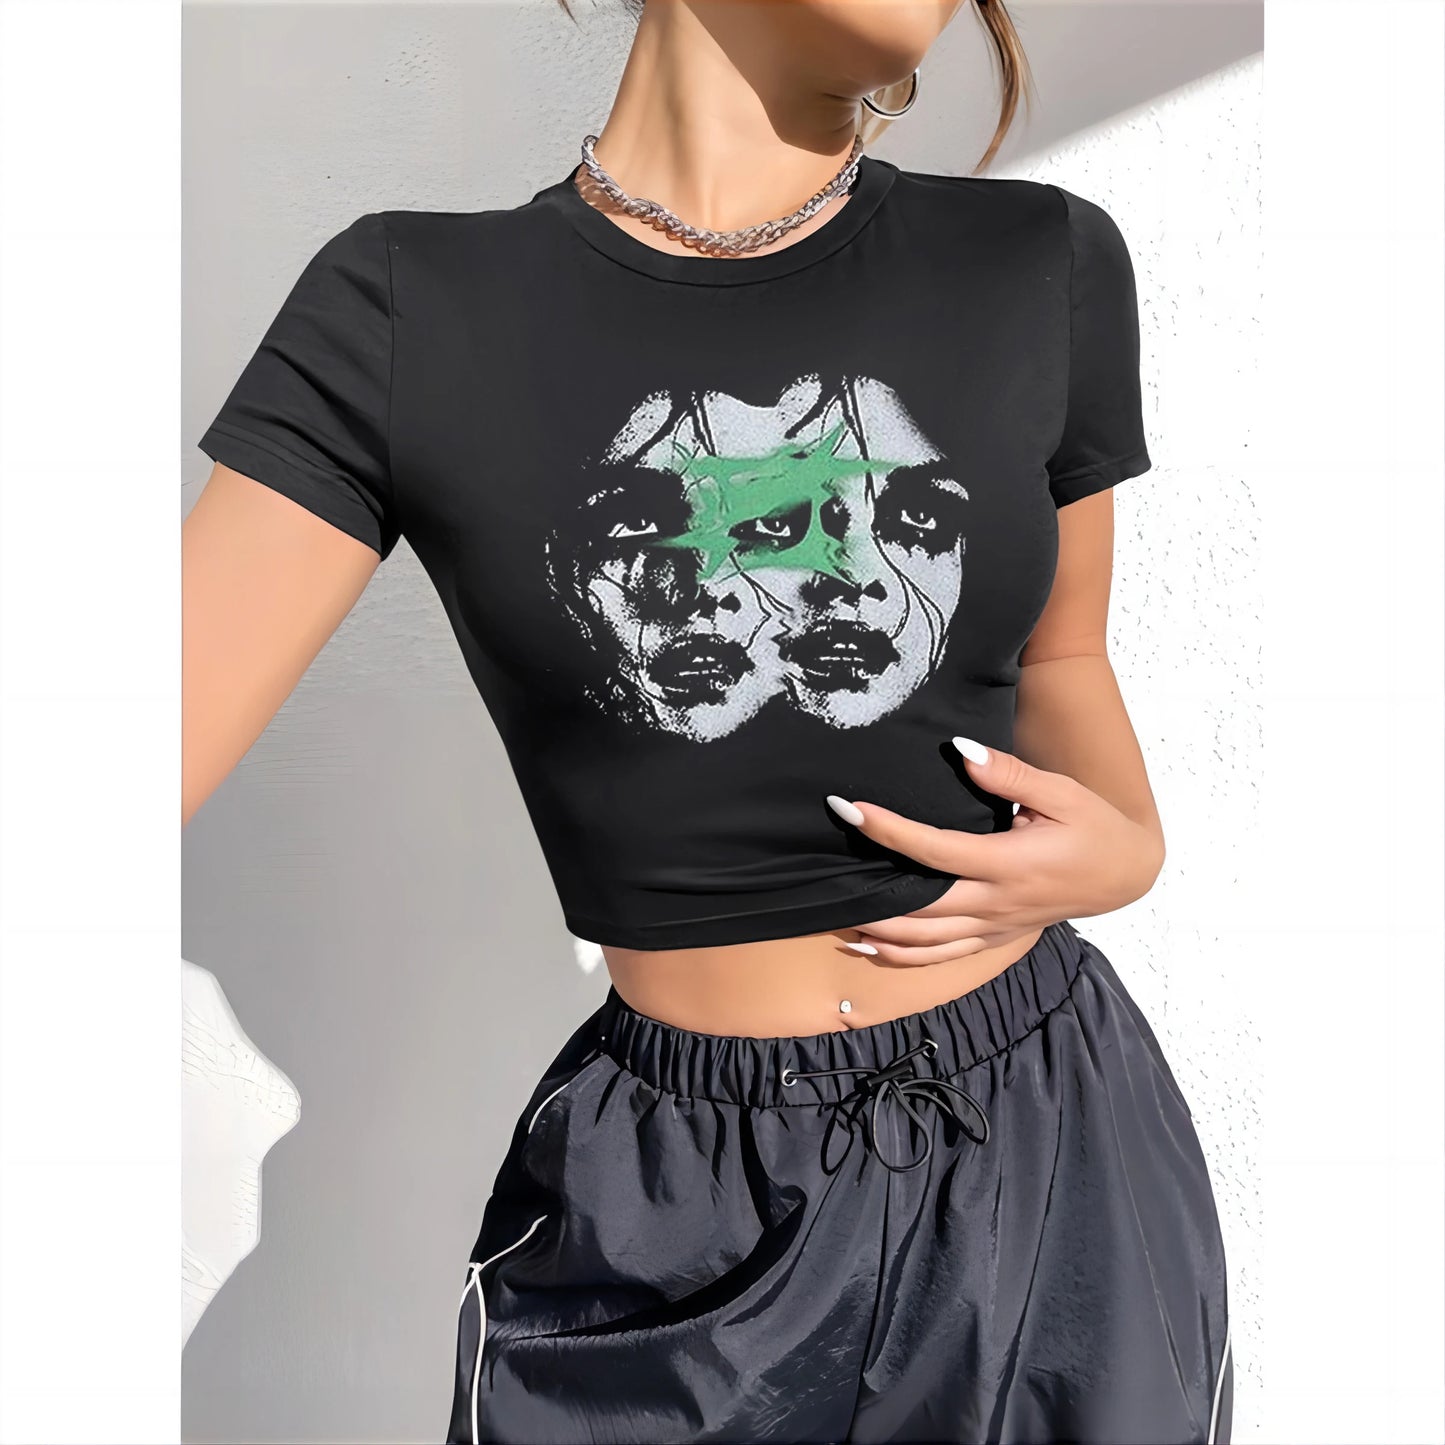 Y2K Retro T-shirt Women's Clothing Pattern T-shirt Printed Short Sleeve T-shirt